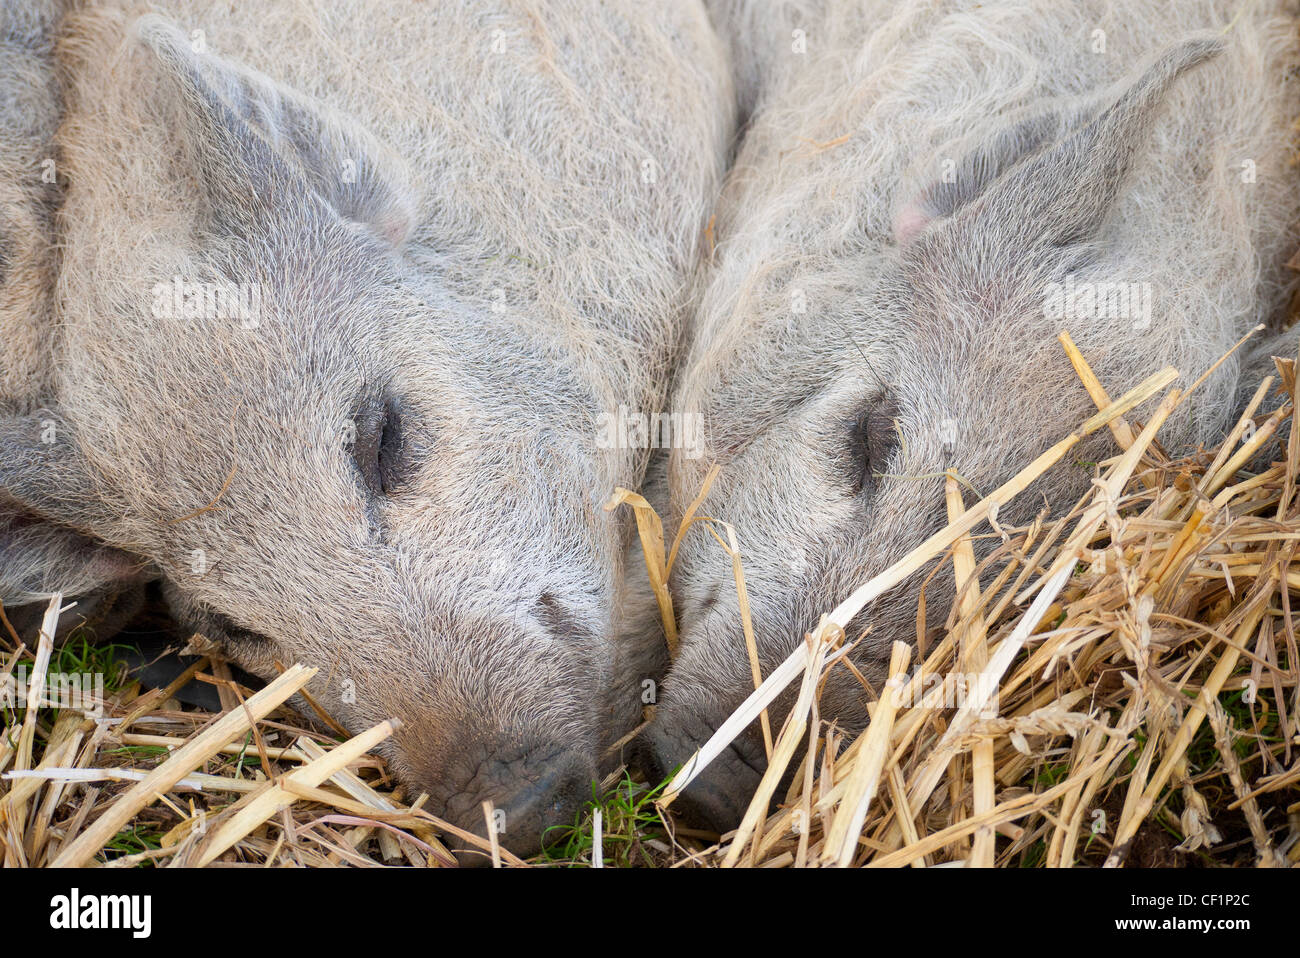 Two pedigree Mangalitza piglets asleep on a bed of straw. Stock Photo